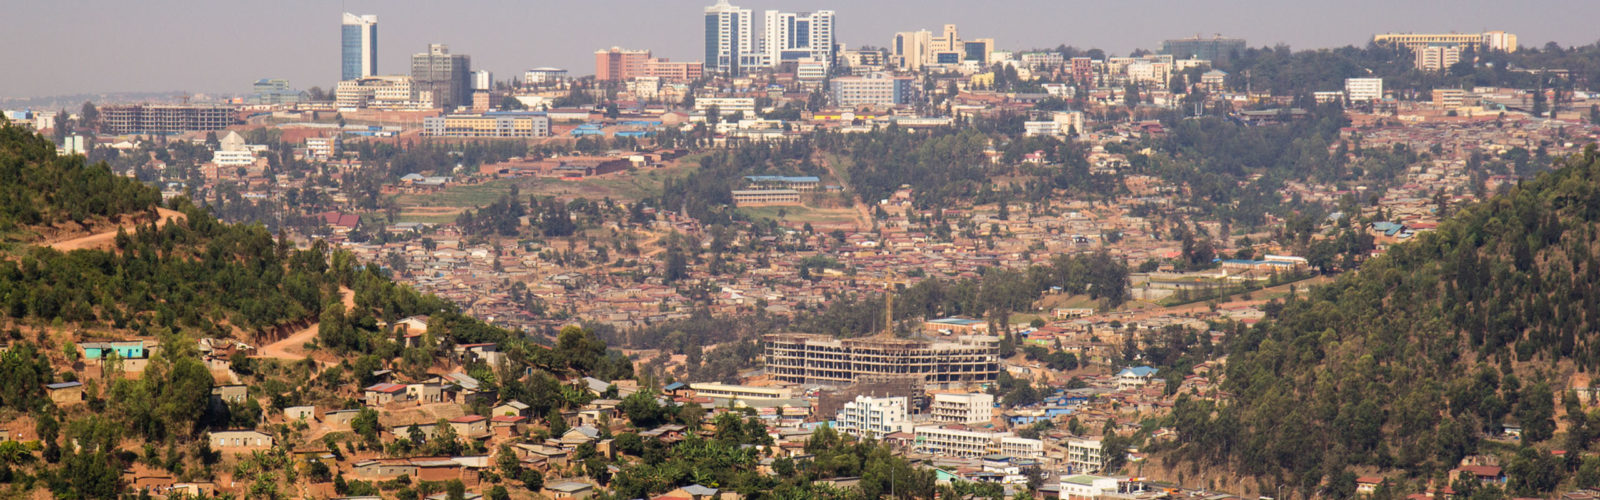 kigali-view-rwanda